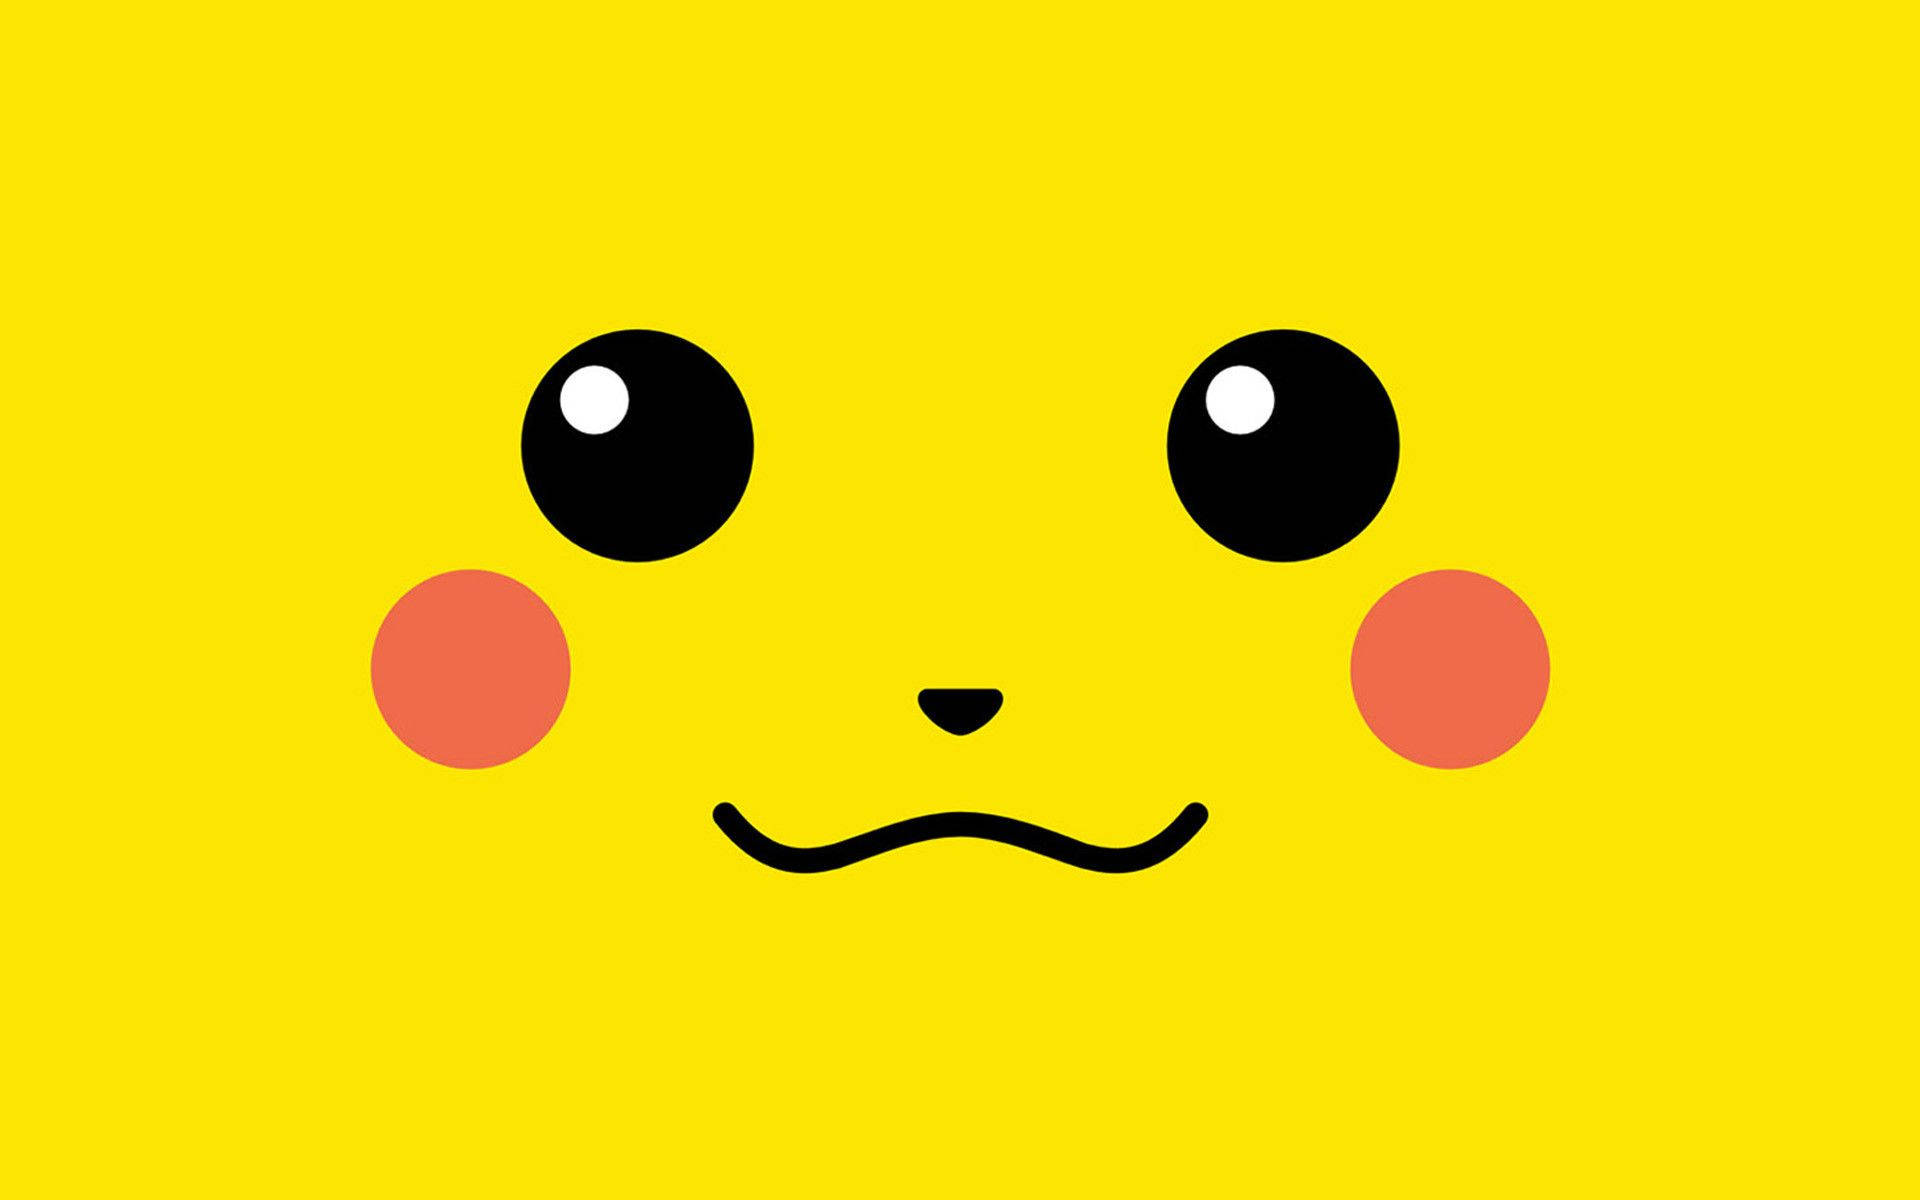 Smiley Face Pikachu Wallpaper